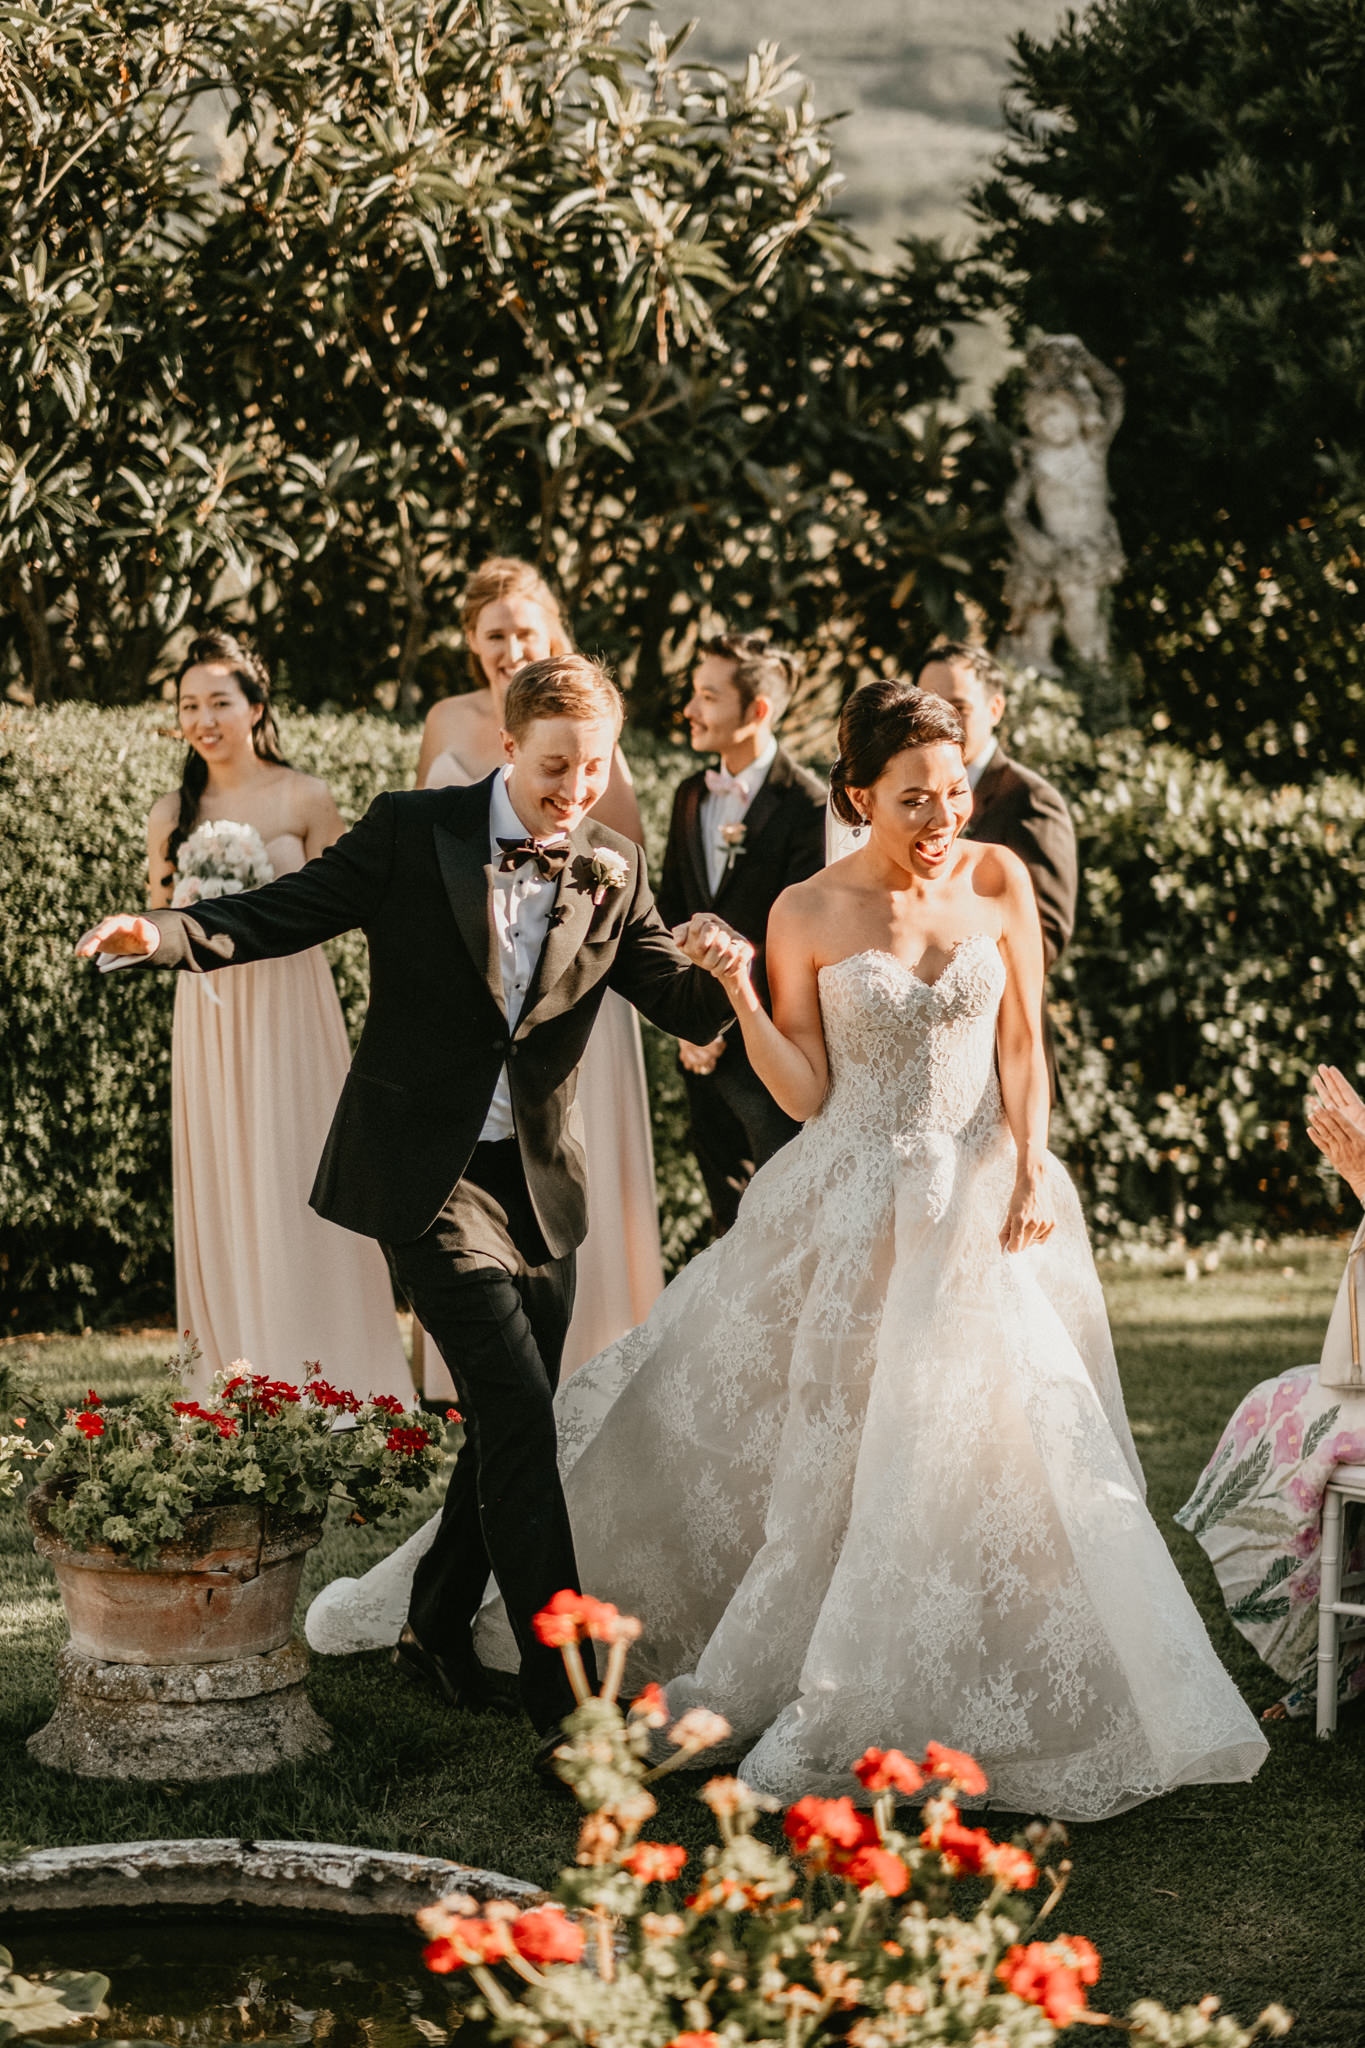 Wedding at Borgo Stomennano, Tuscany - Ceremony